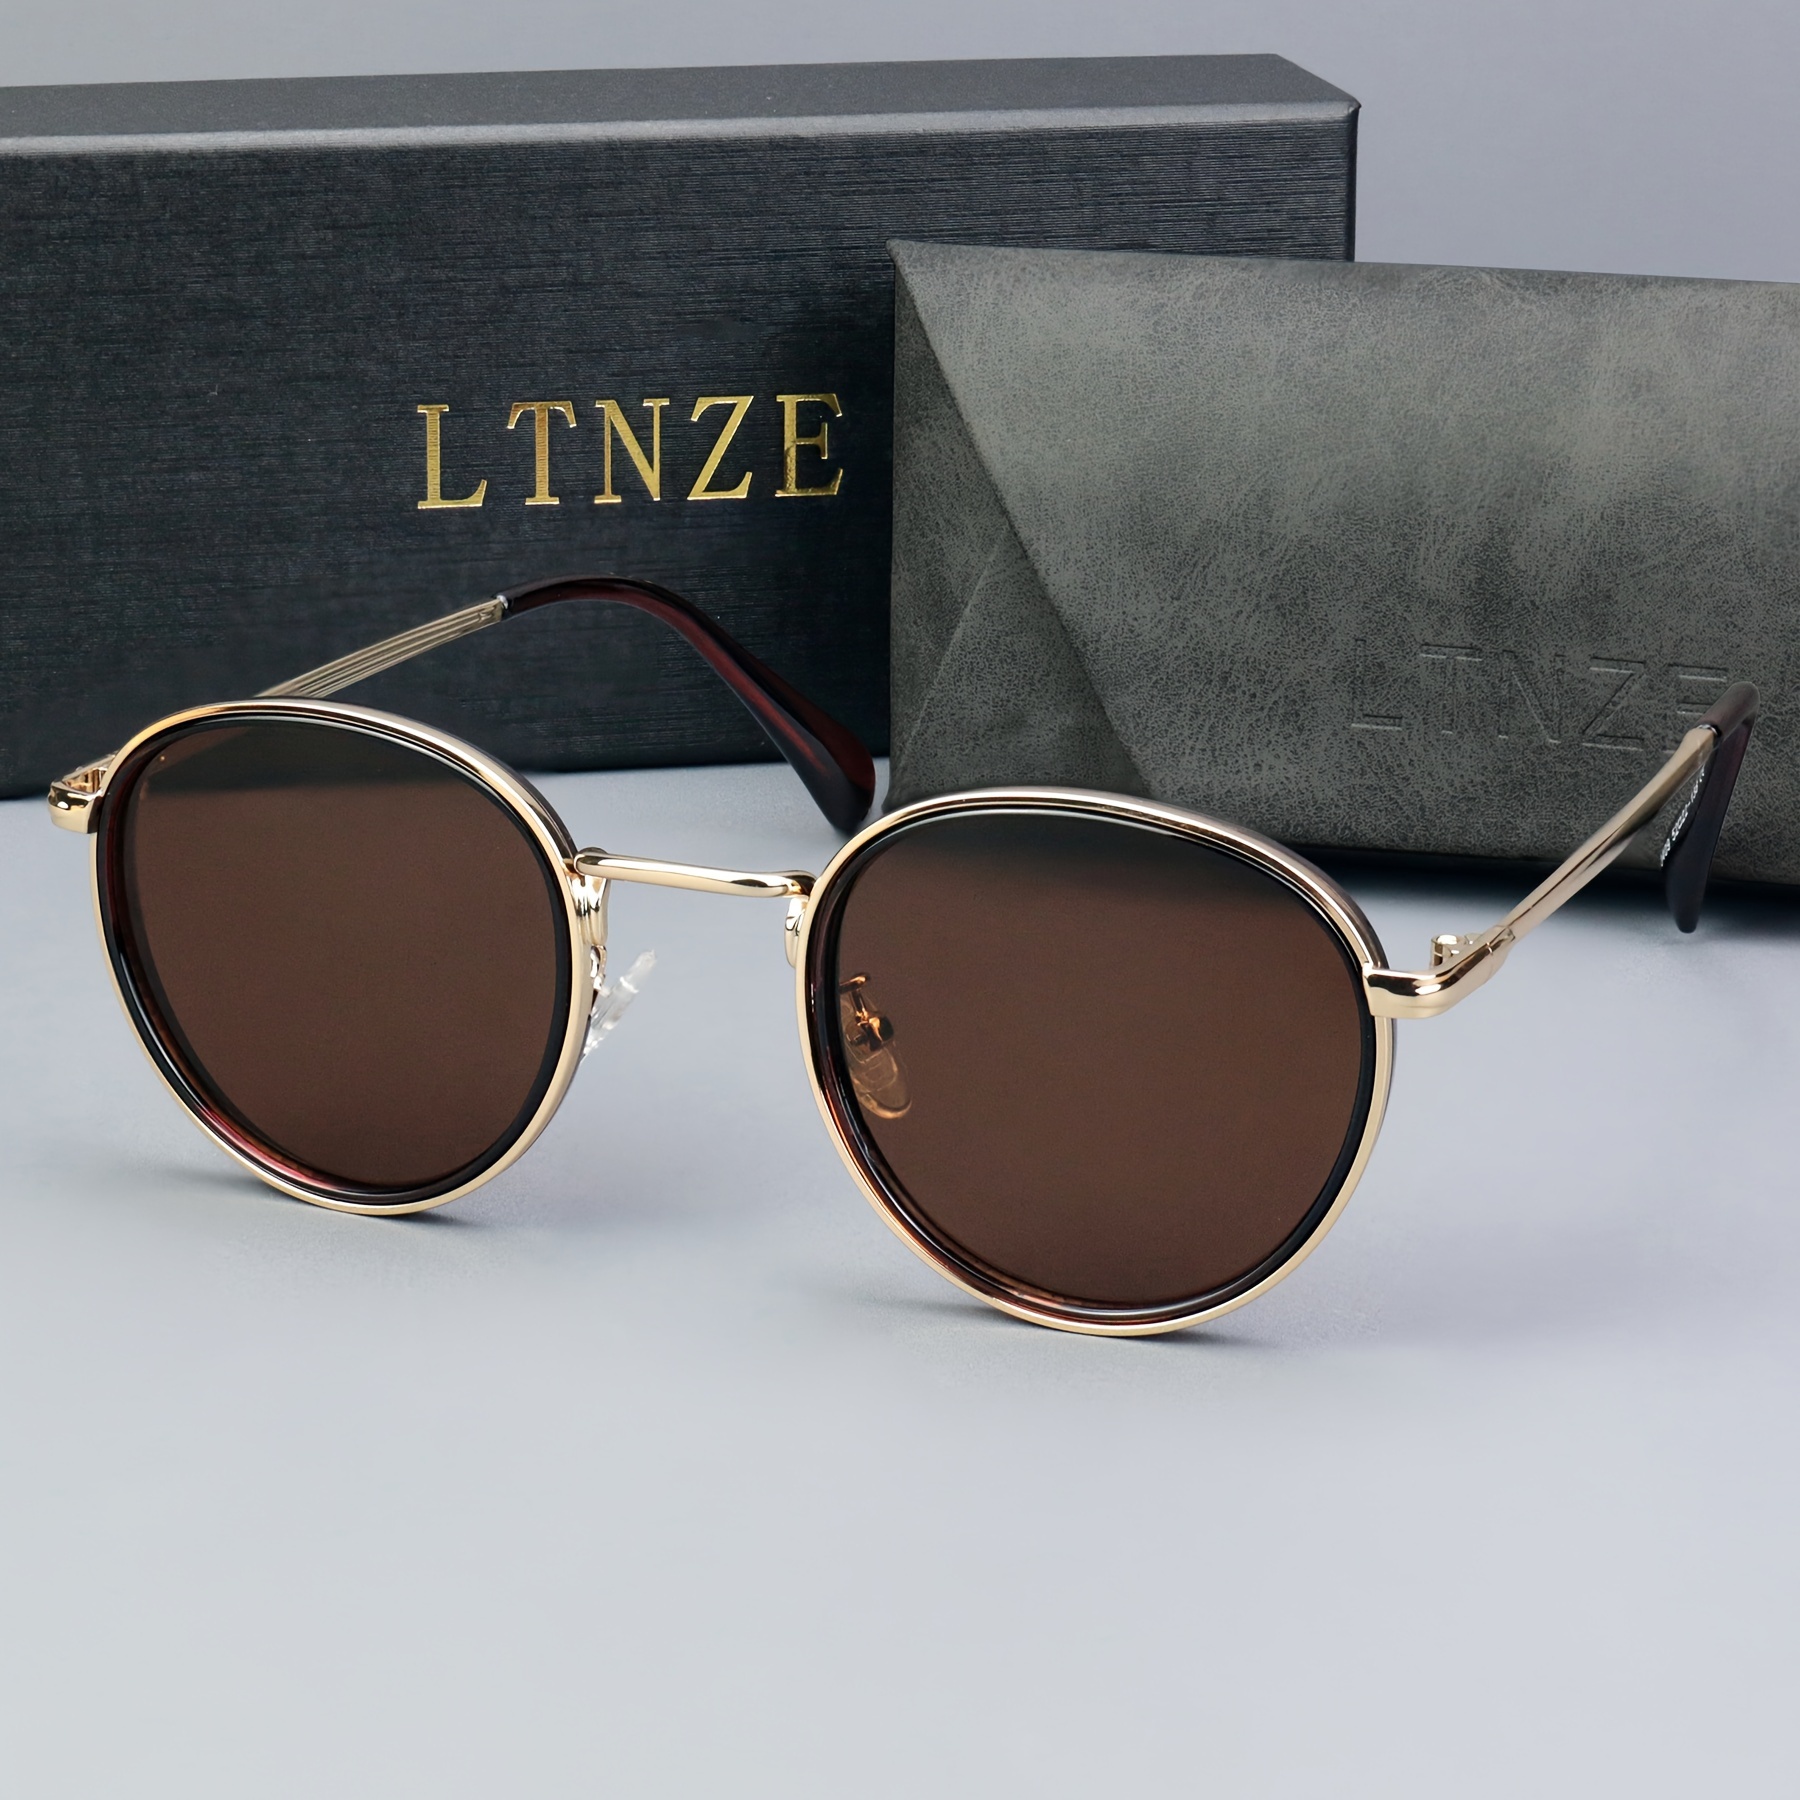 

Ltnze Round Frame Sunglasses For Women Anti Glare Sun Shades Glasses For Driving Beach Travel